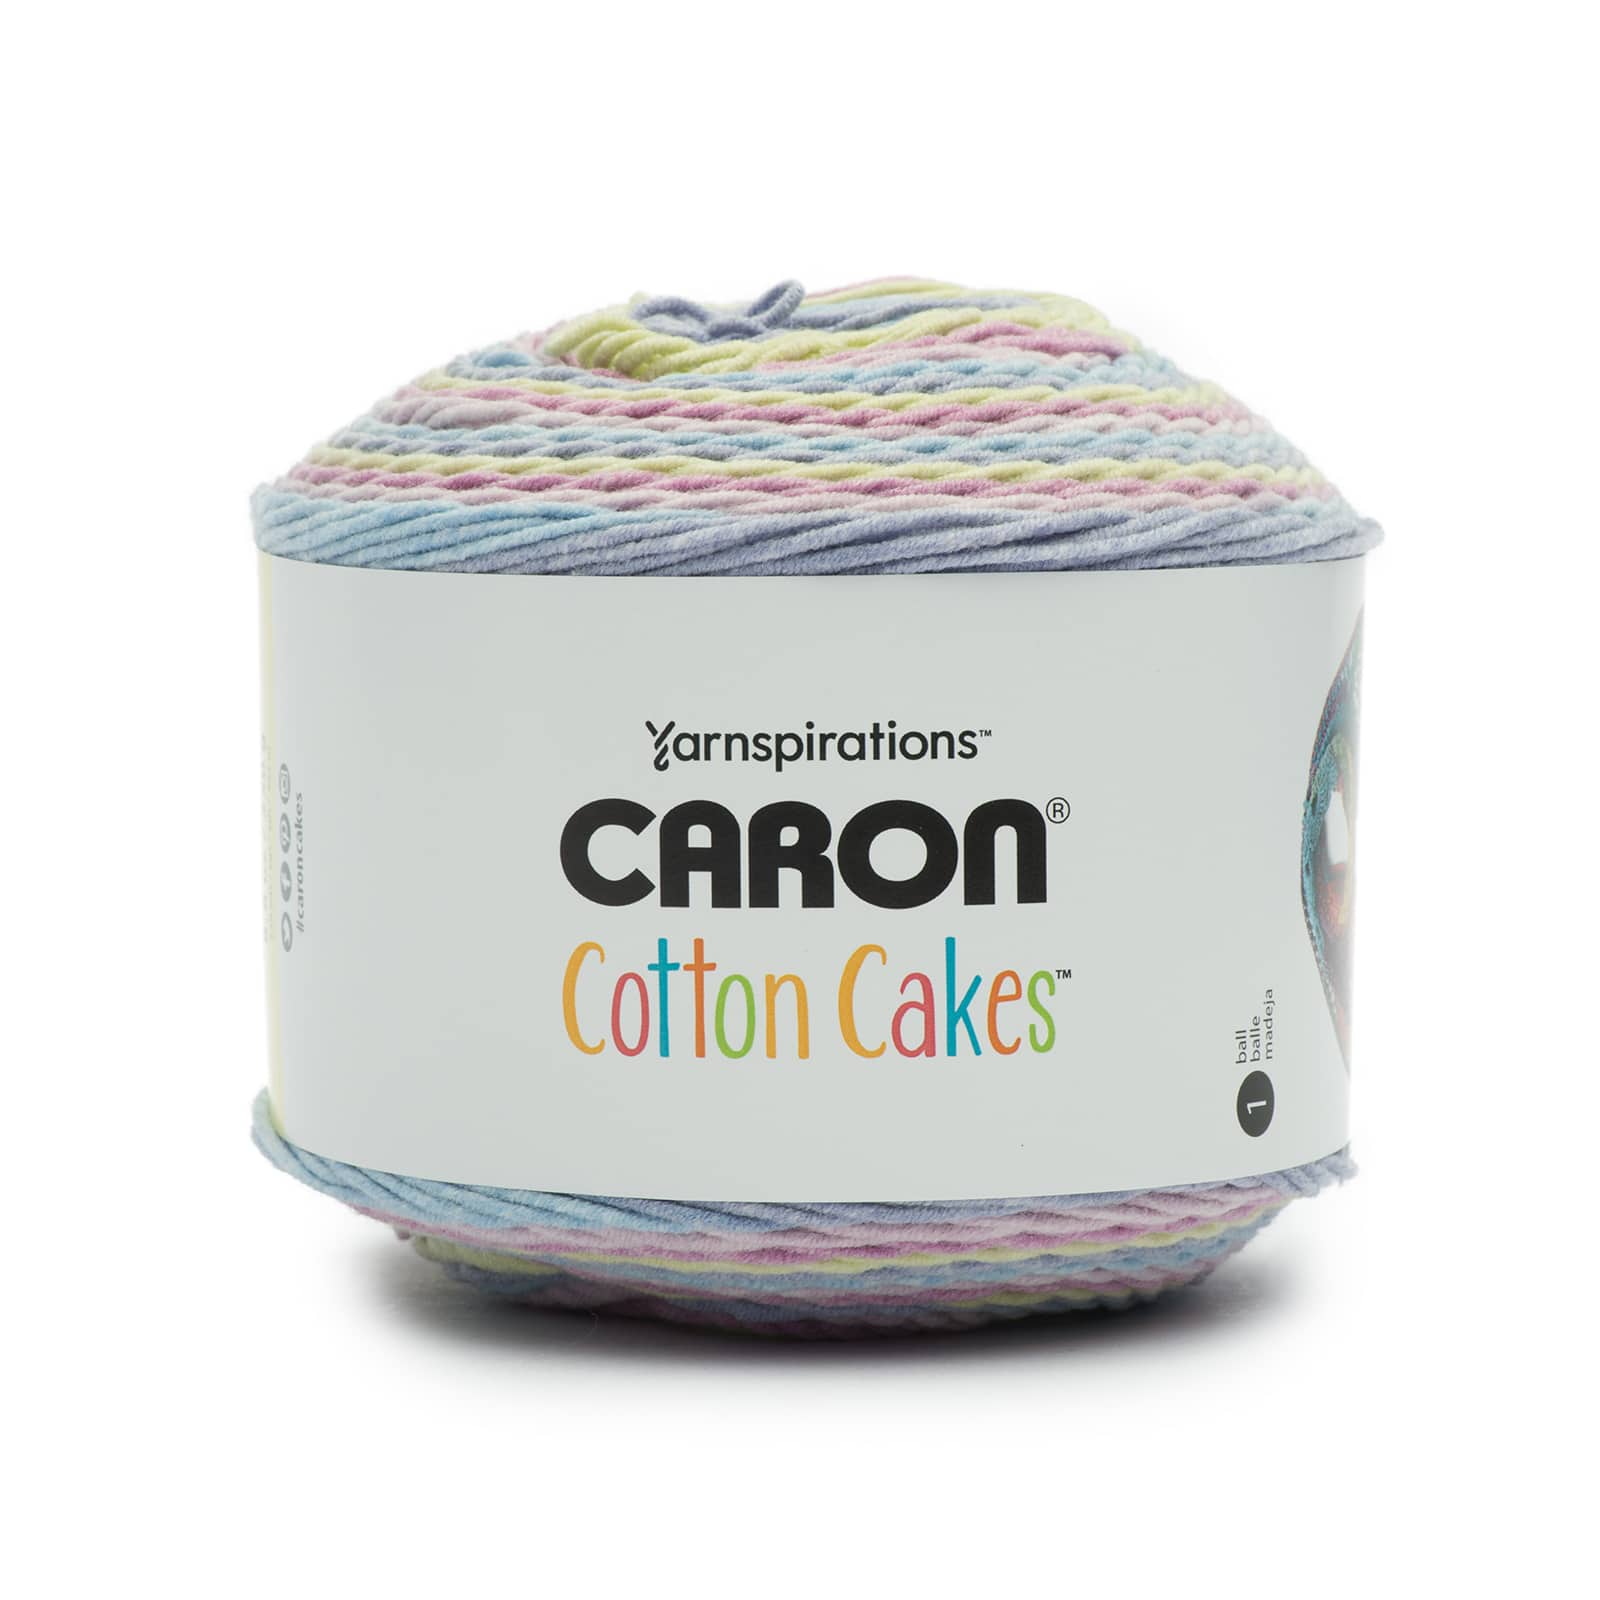 Caron® Chunky Cakes™ Yarn